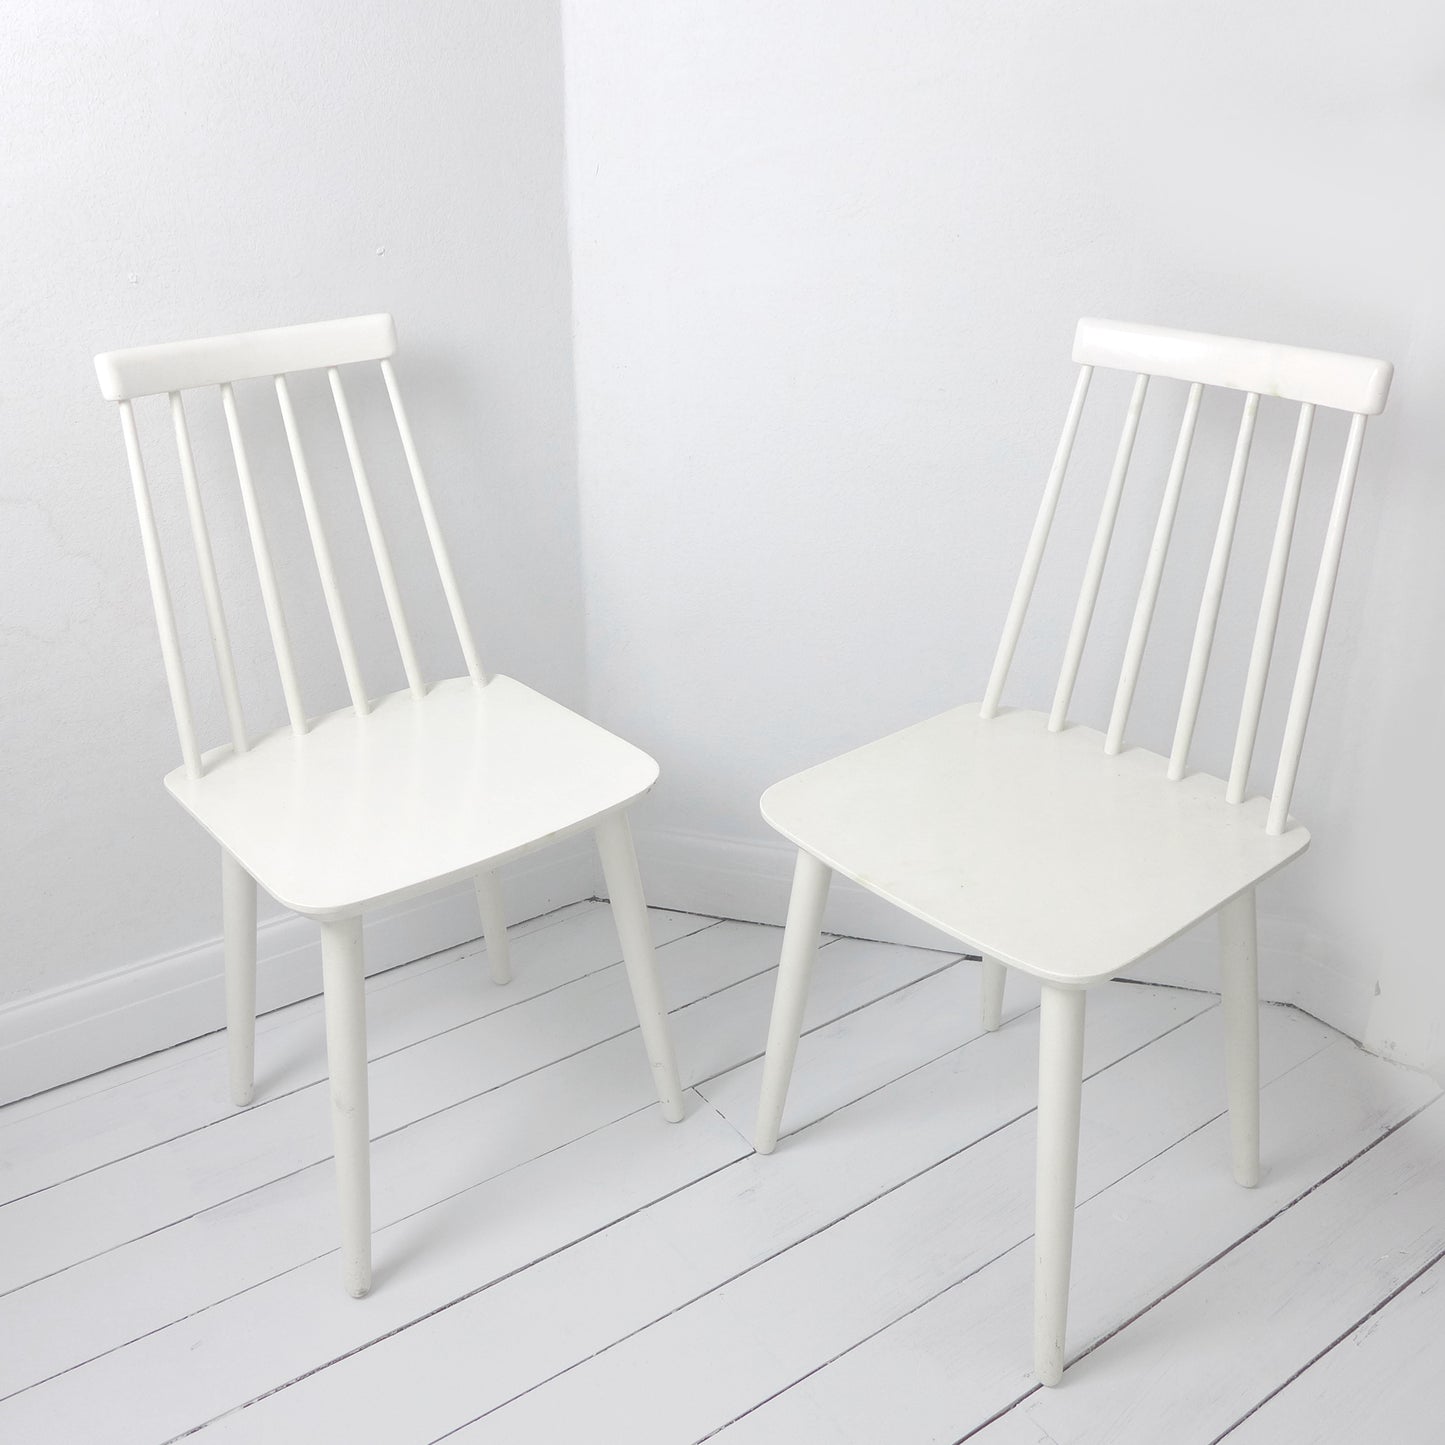 Danish Billund Stolefabrik Chairs - Pair in White - Mid Century